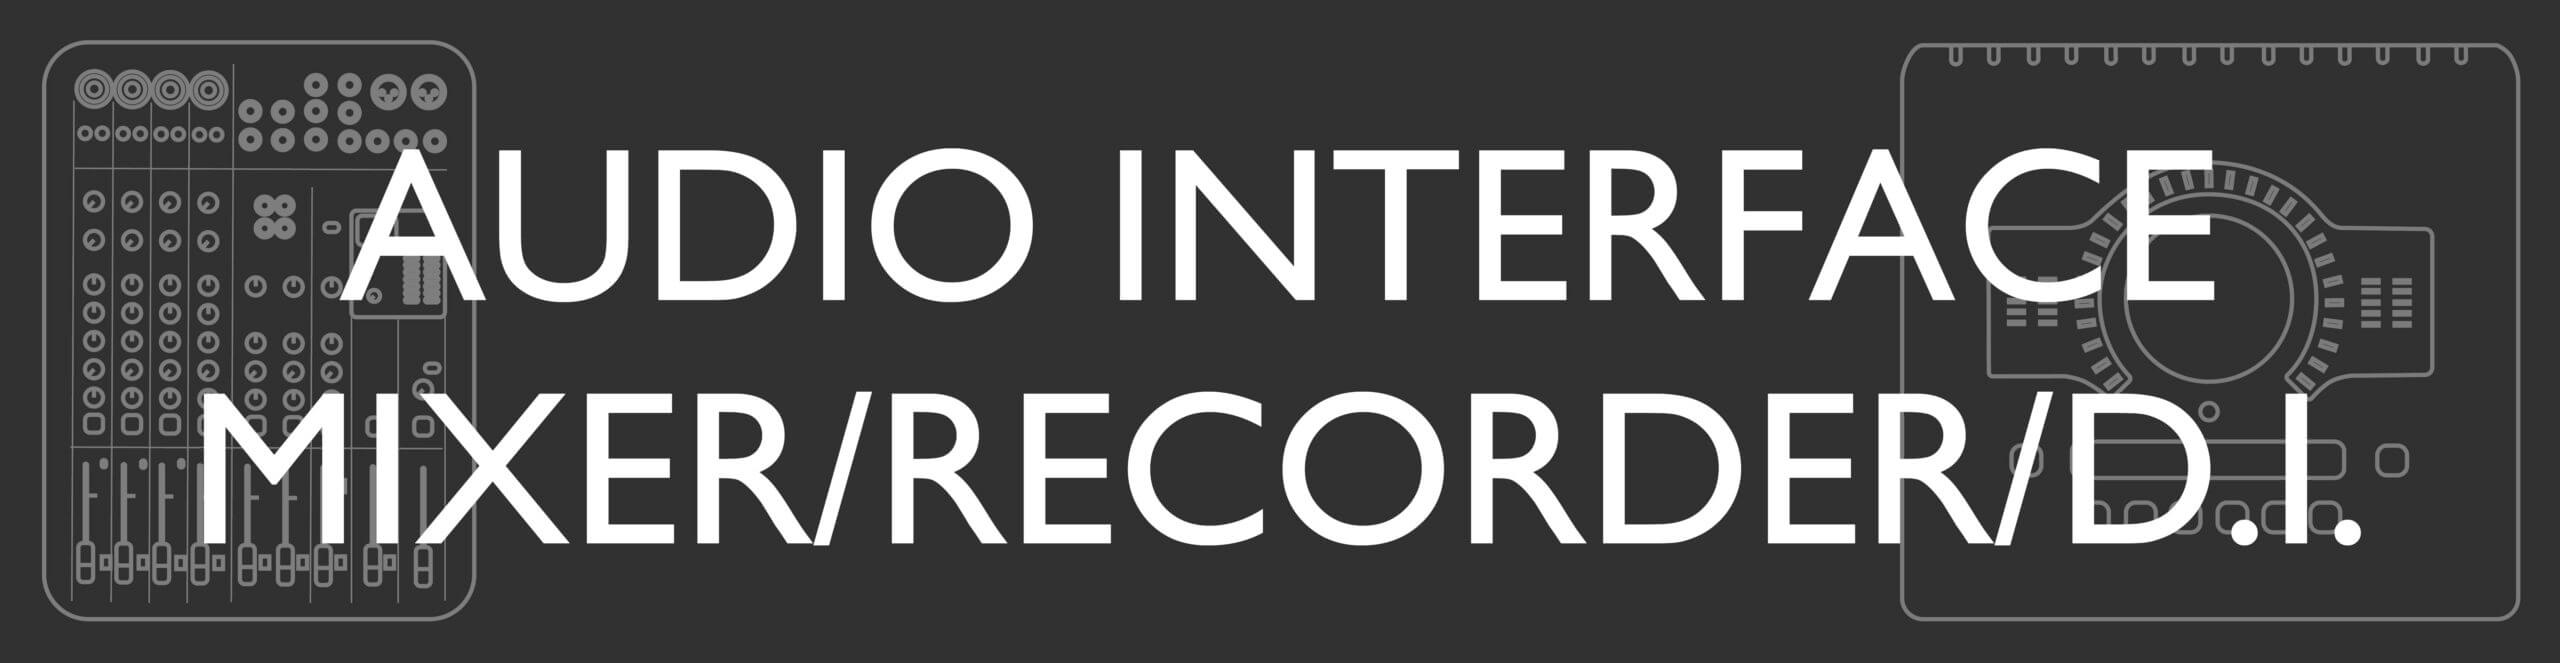 AUDIO INTERFACE/MIXER/RECORDER/D.I